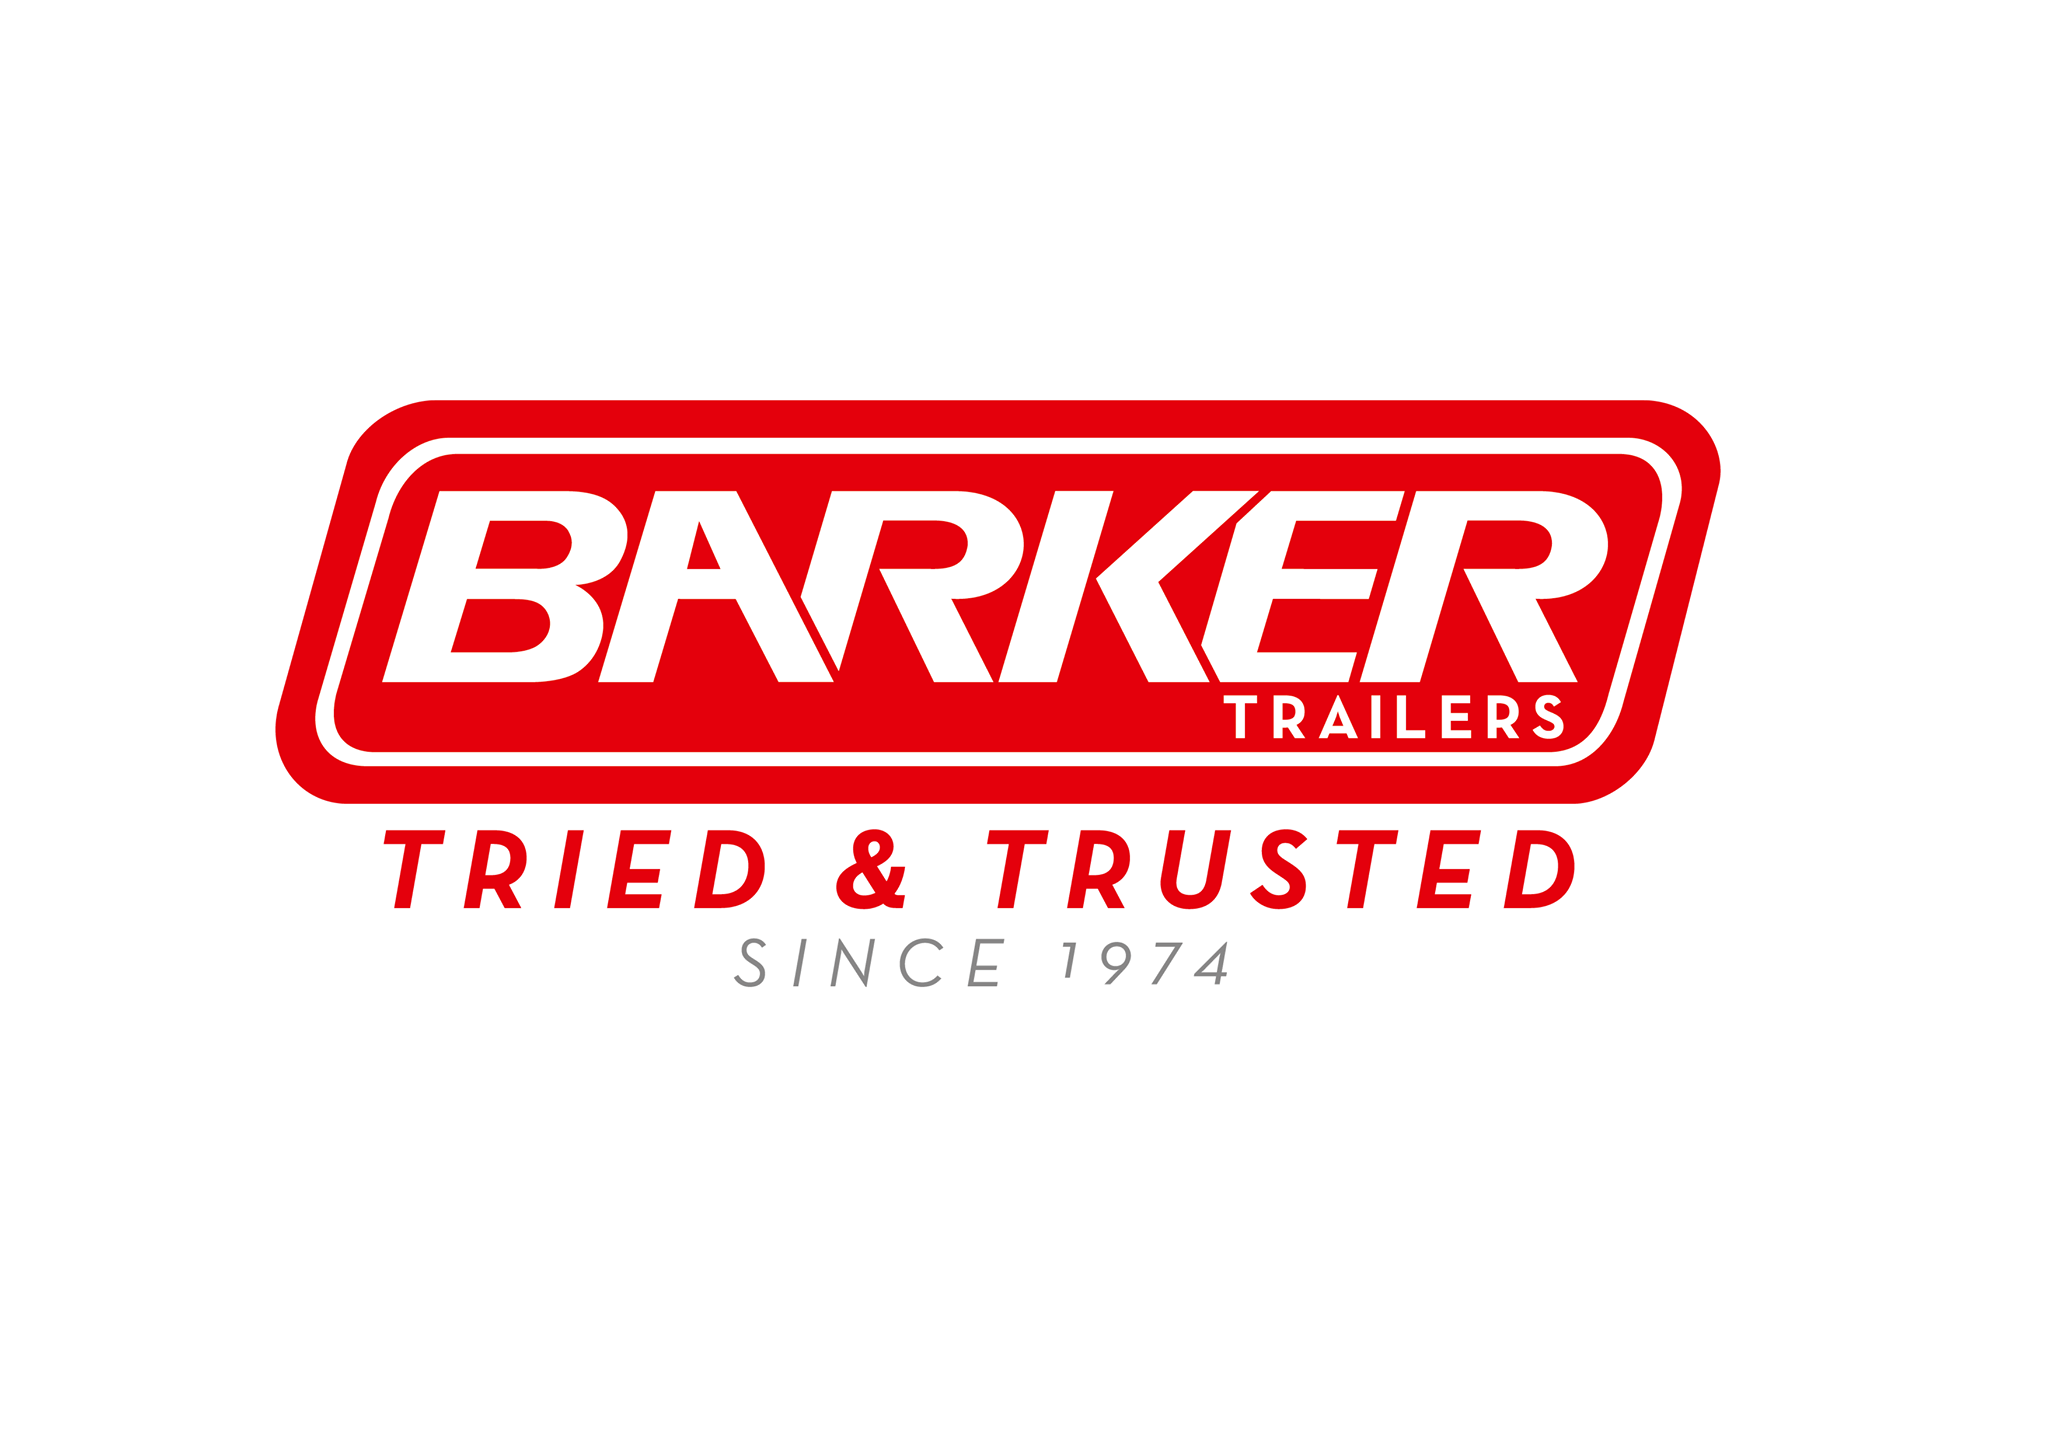 Business logo of Barker Trailers